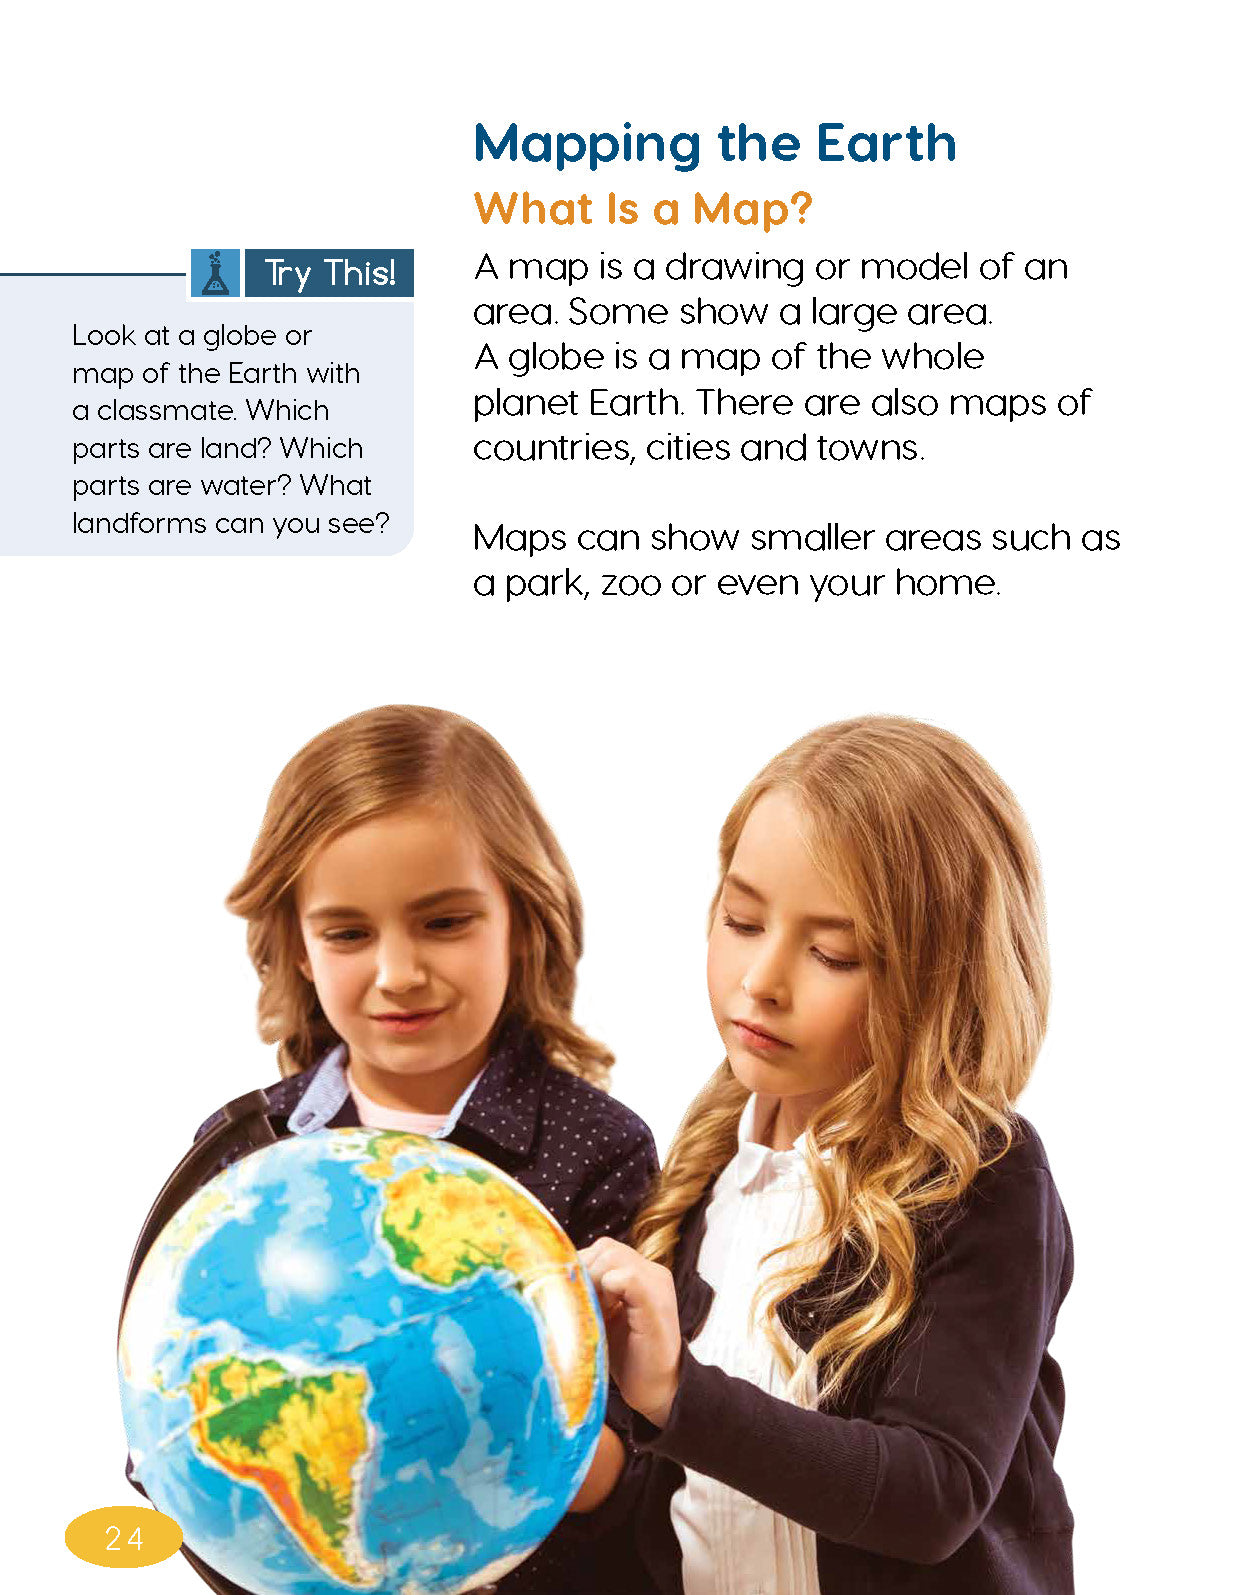 Next Generation Science Textbook – Grade 2, Book B